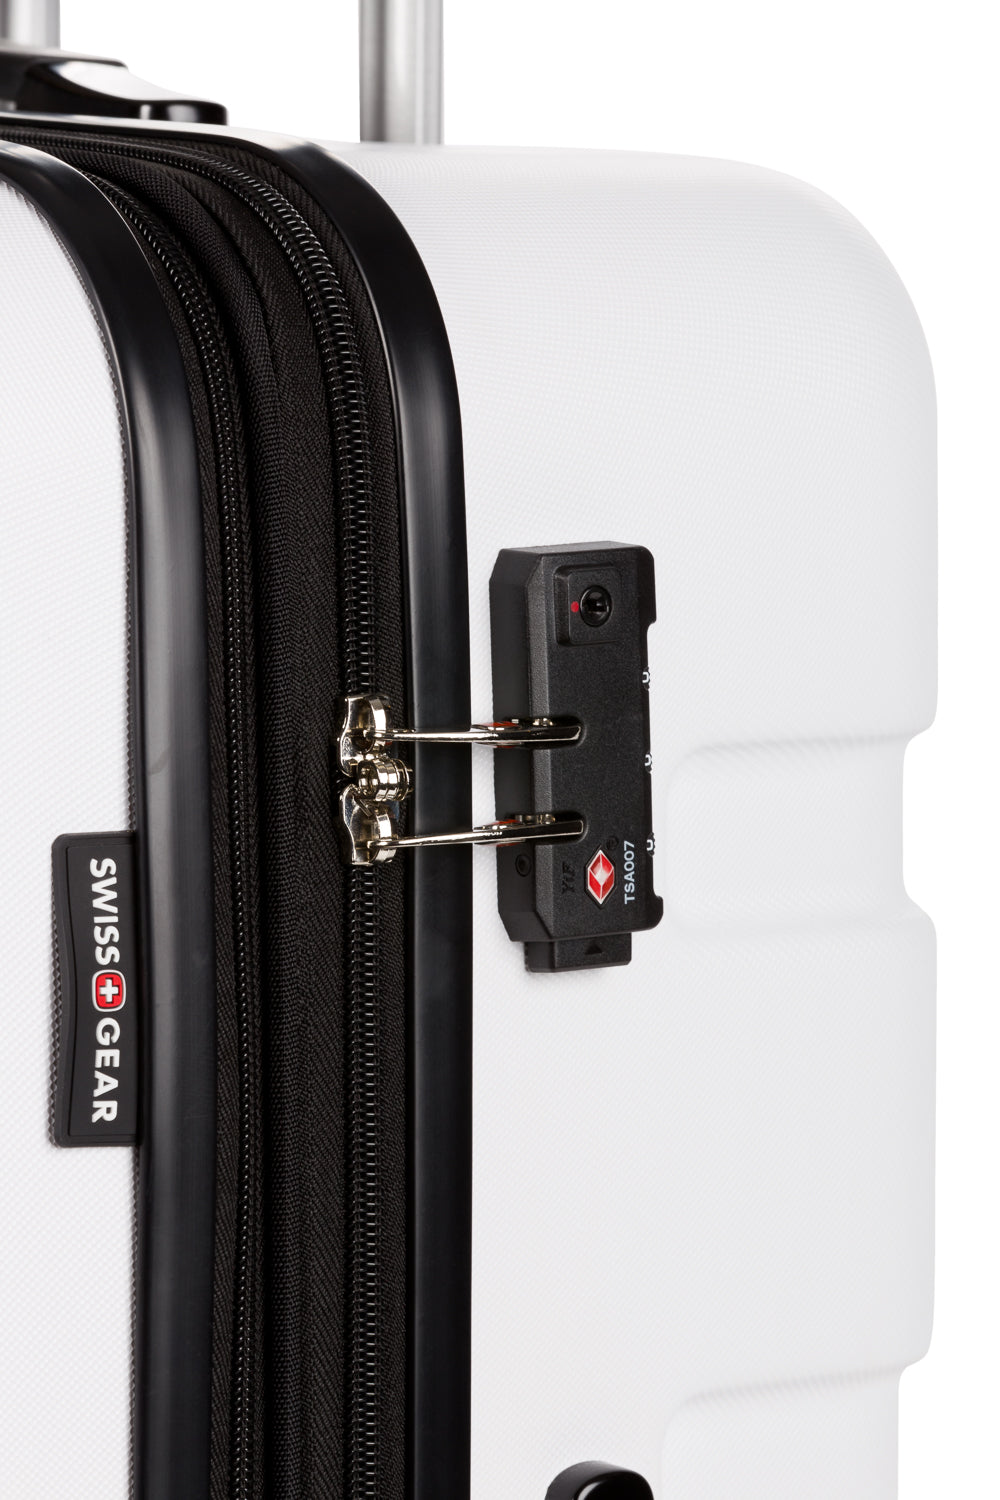 SwissGear 7366 Expandable 3 Piece Hardside Spinner Luggage Set